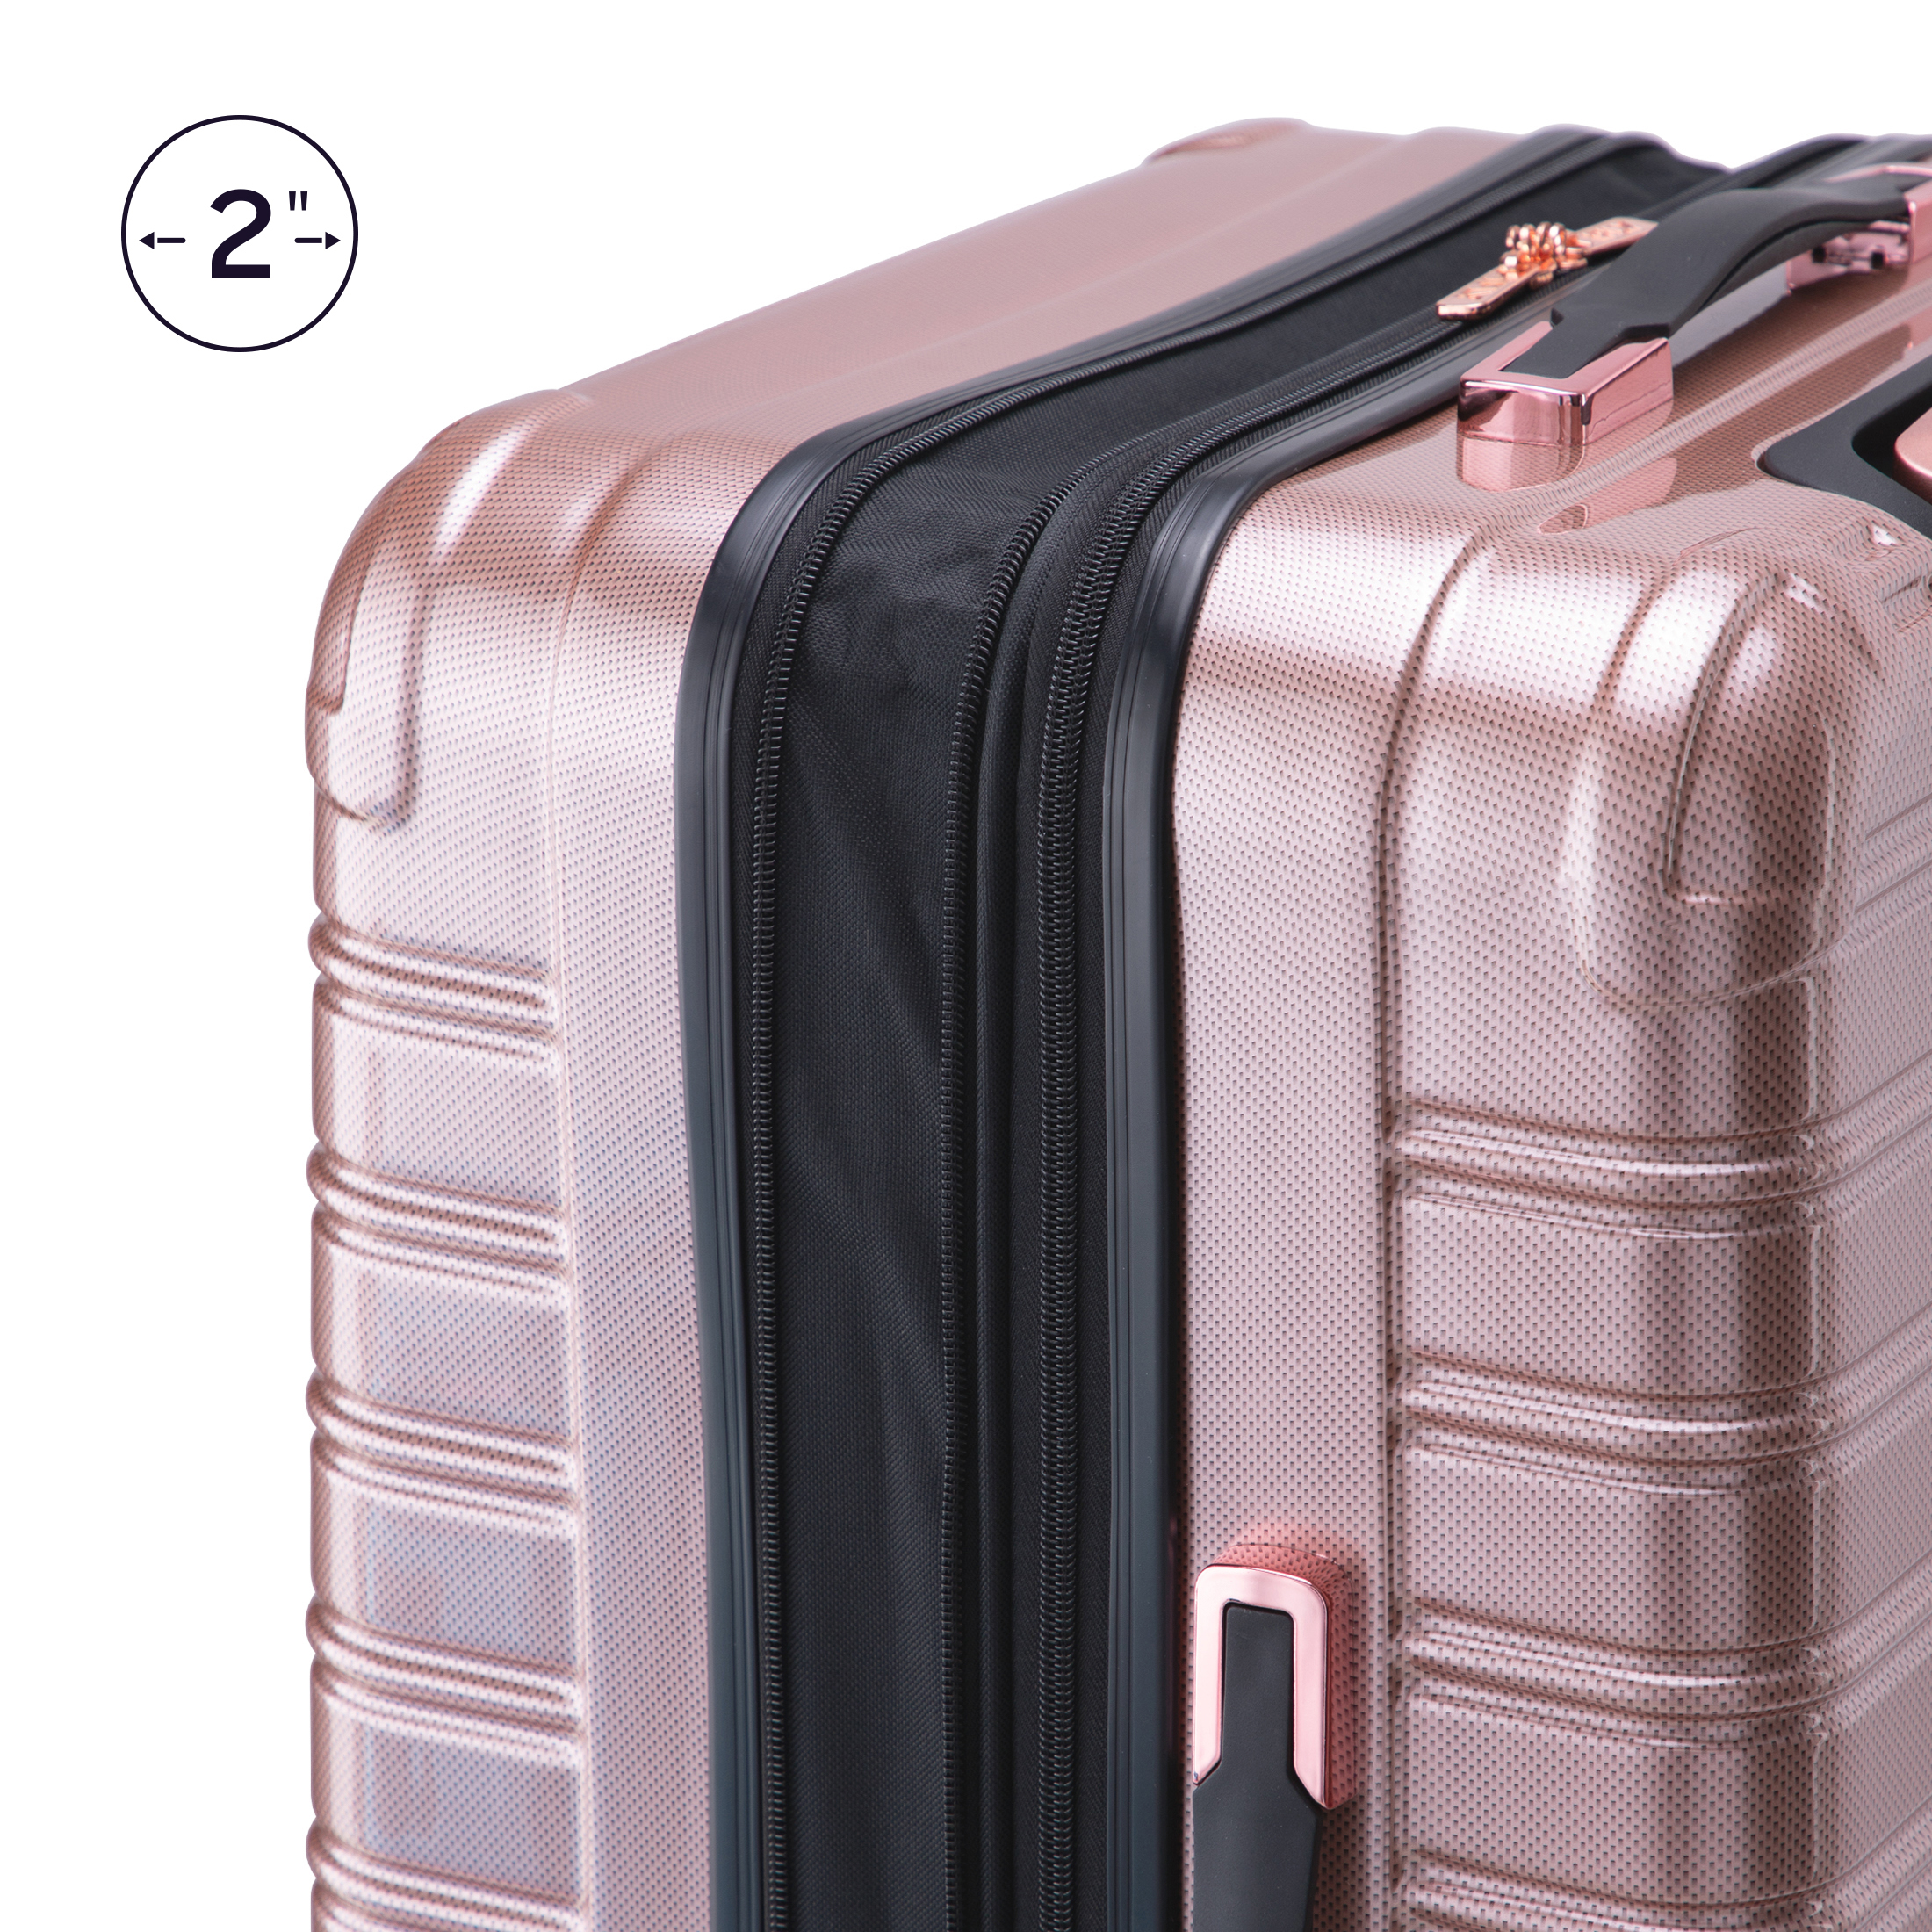 iFLY Hardside Luggage Fibertech 3 Piece Set, 20" Carry-on Luggage, 24" Checked Luggage and 28" Checked Luggage, Rose Gold - image 5 of 12